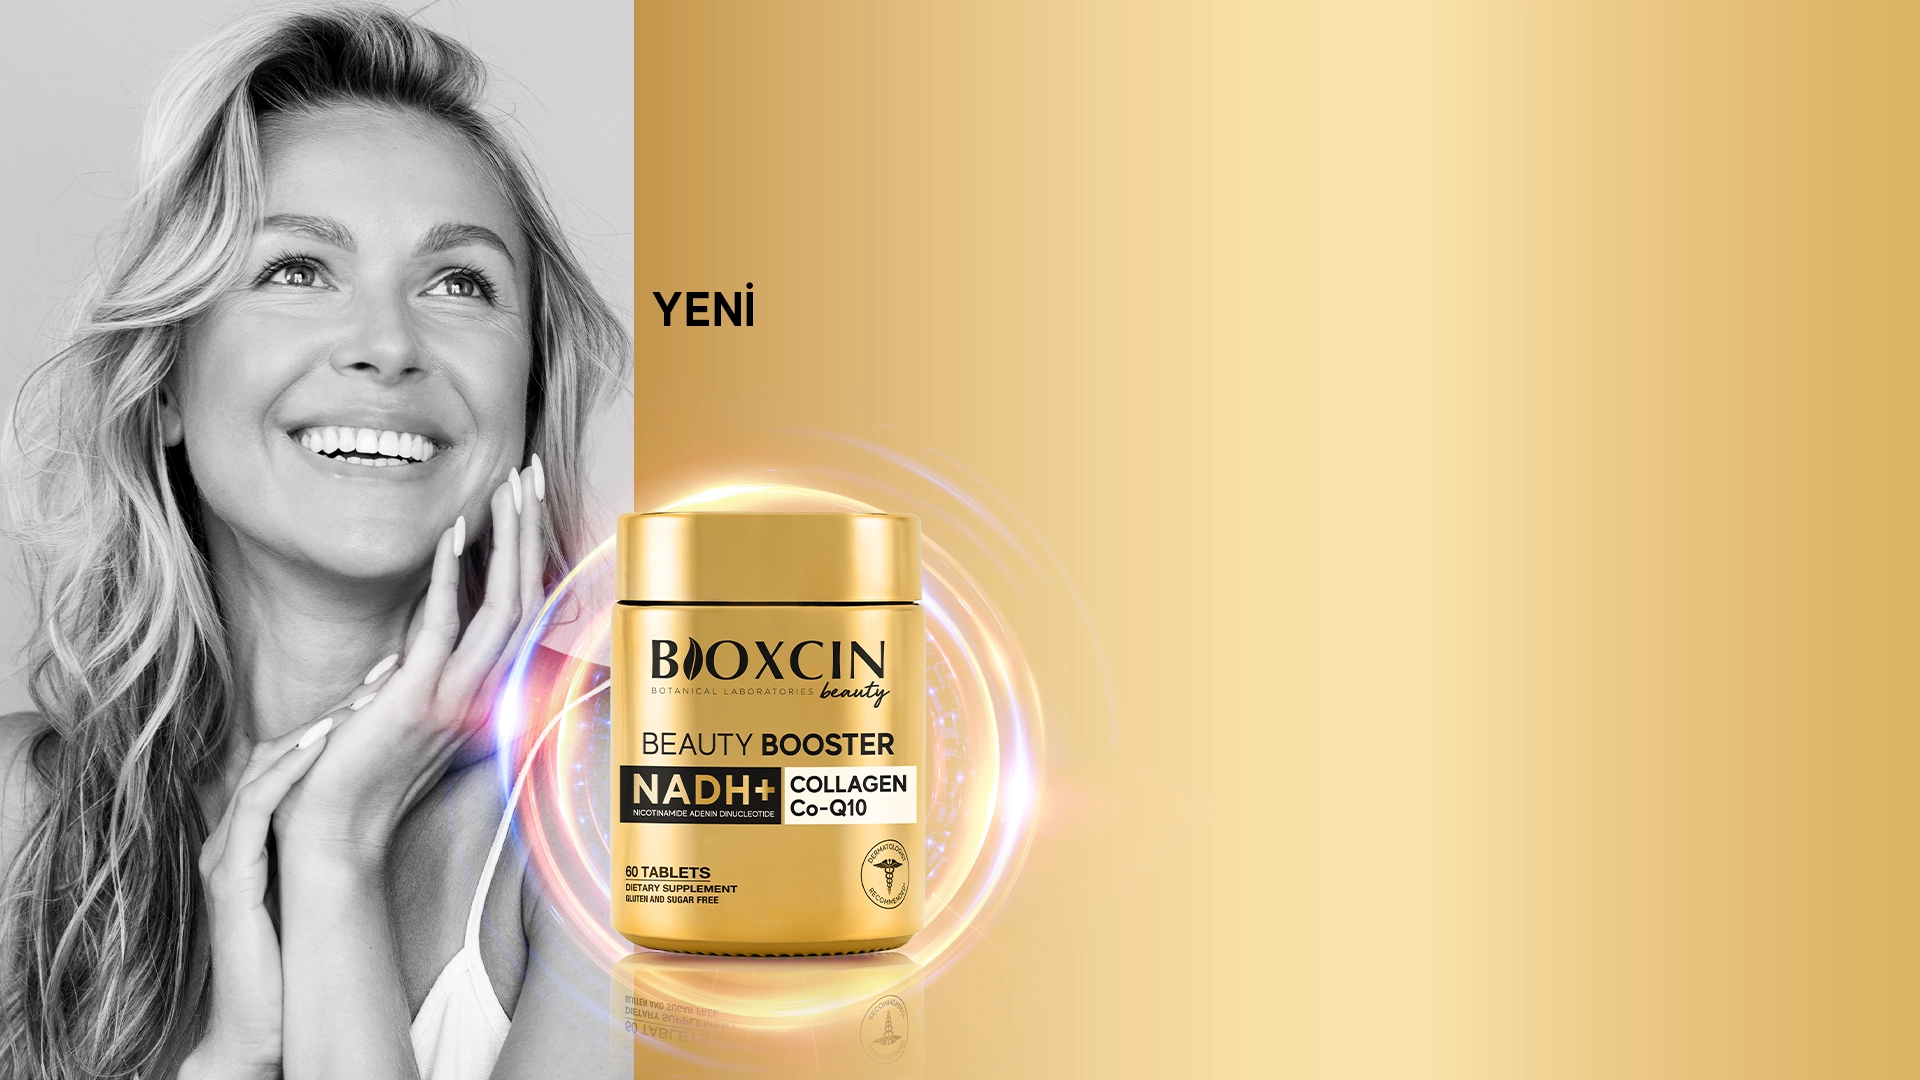 Bioxcin NADH+ Beauty Booster